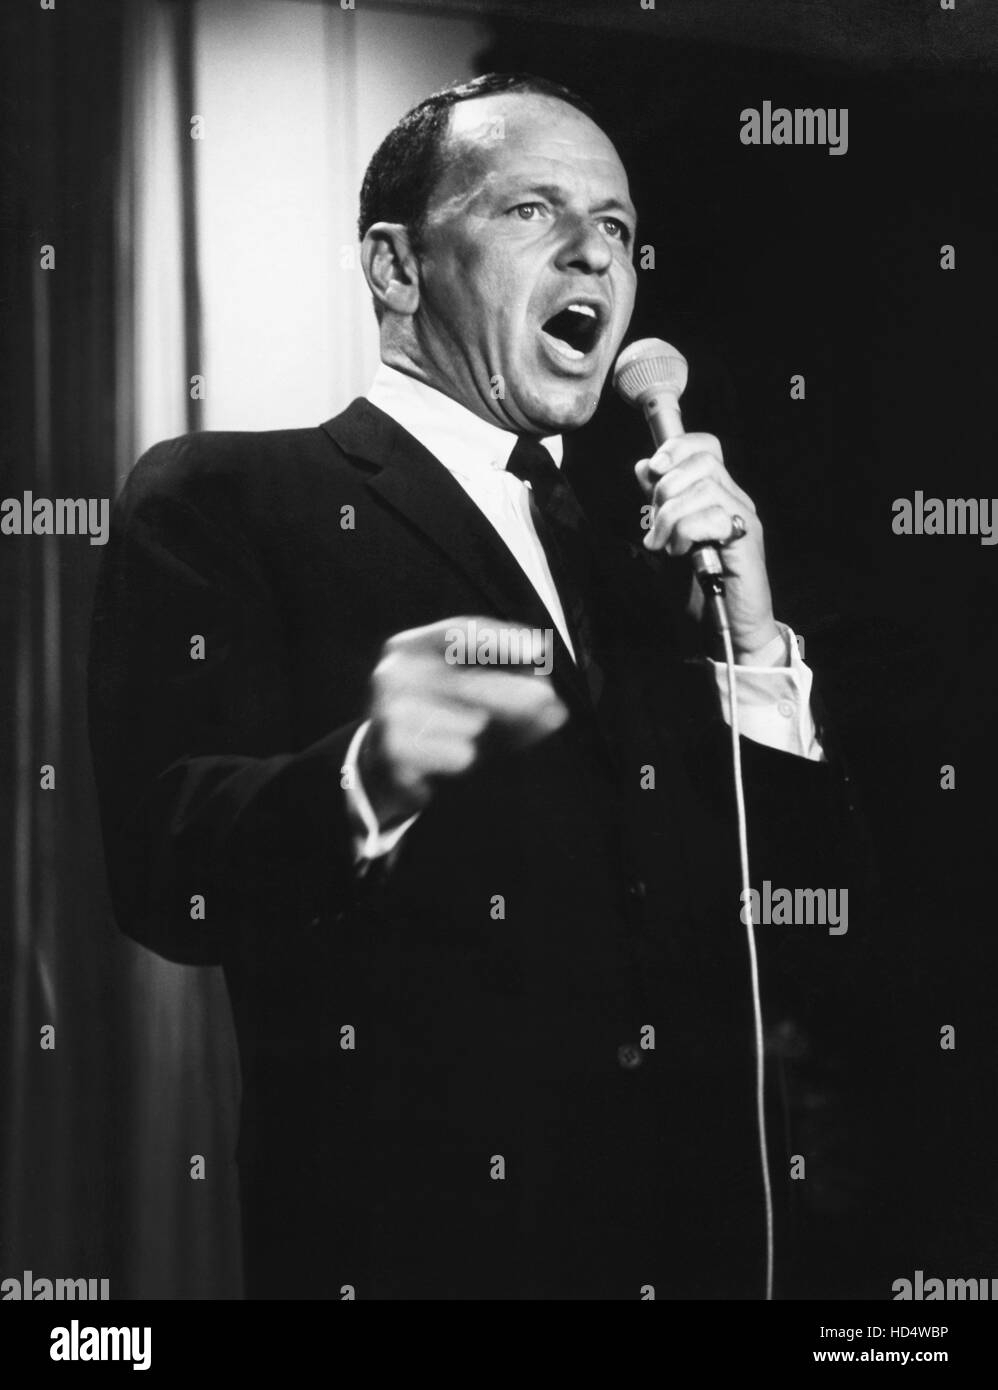 FRANK SINATRA: A MAN AND HIS MUSIC, Frank Sinatra, aired November 24 ...